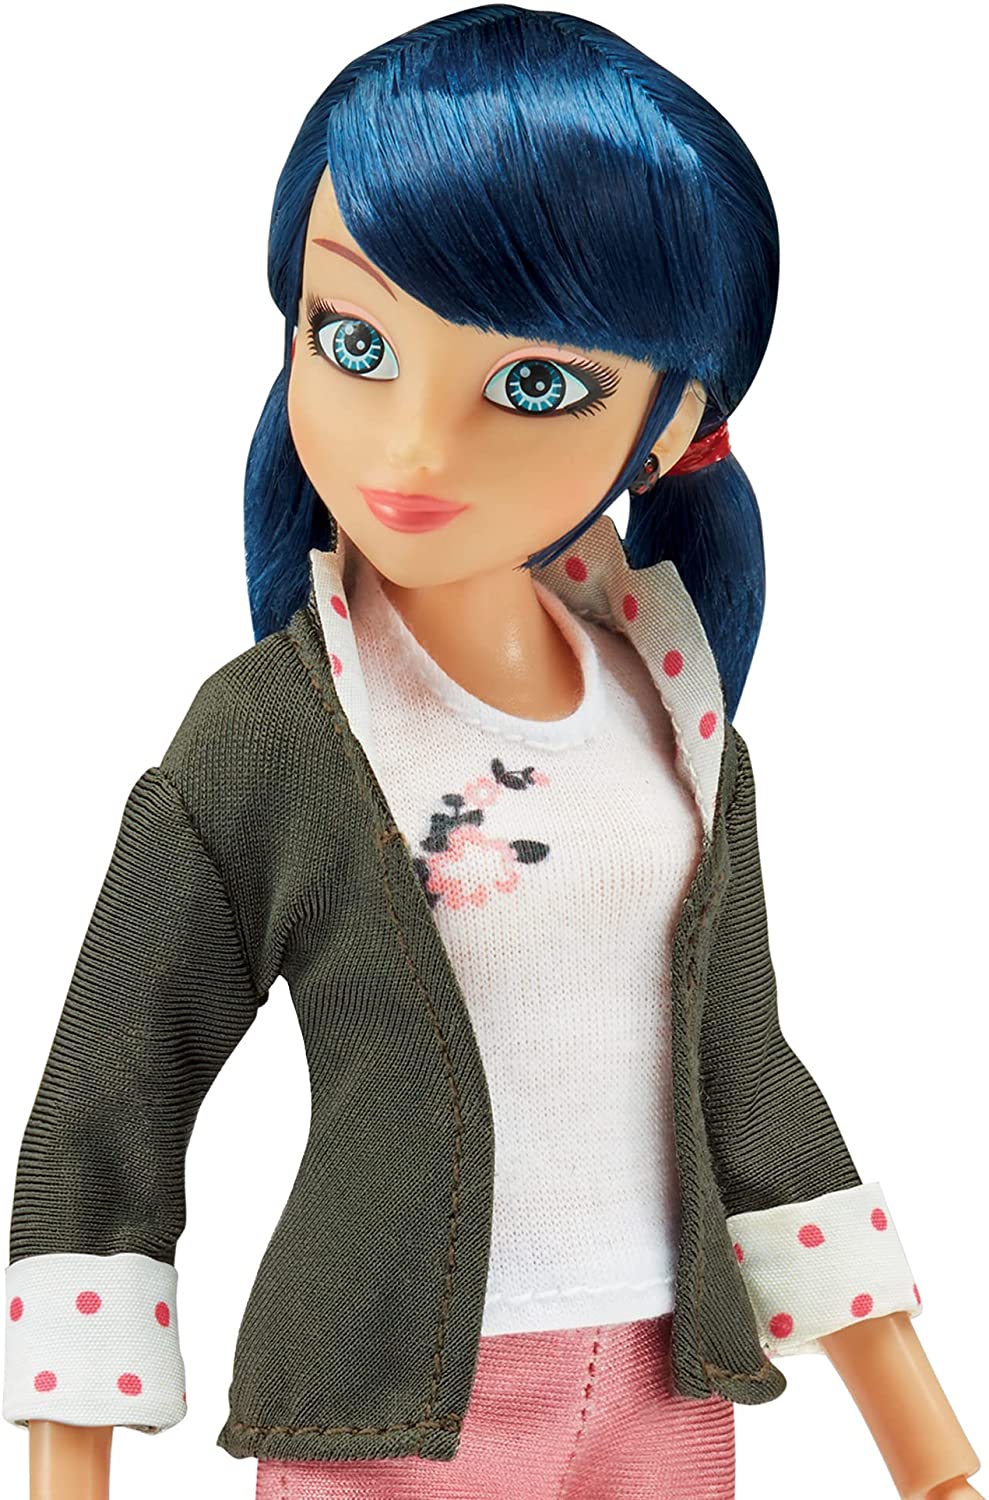 Miraculous - Marinette Fashion Doll 10.5 Inch Playmates Toys - Dolls Heretoserveyou